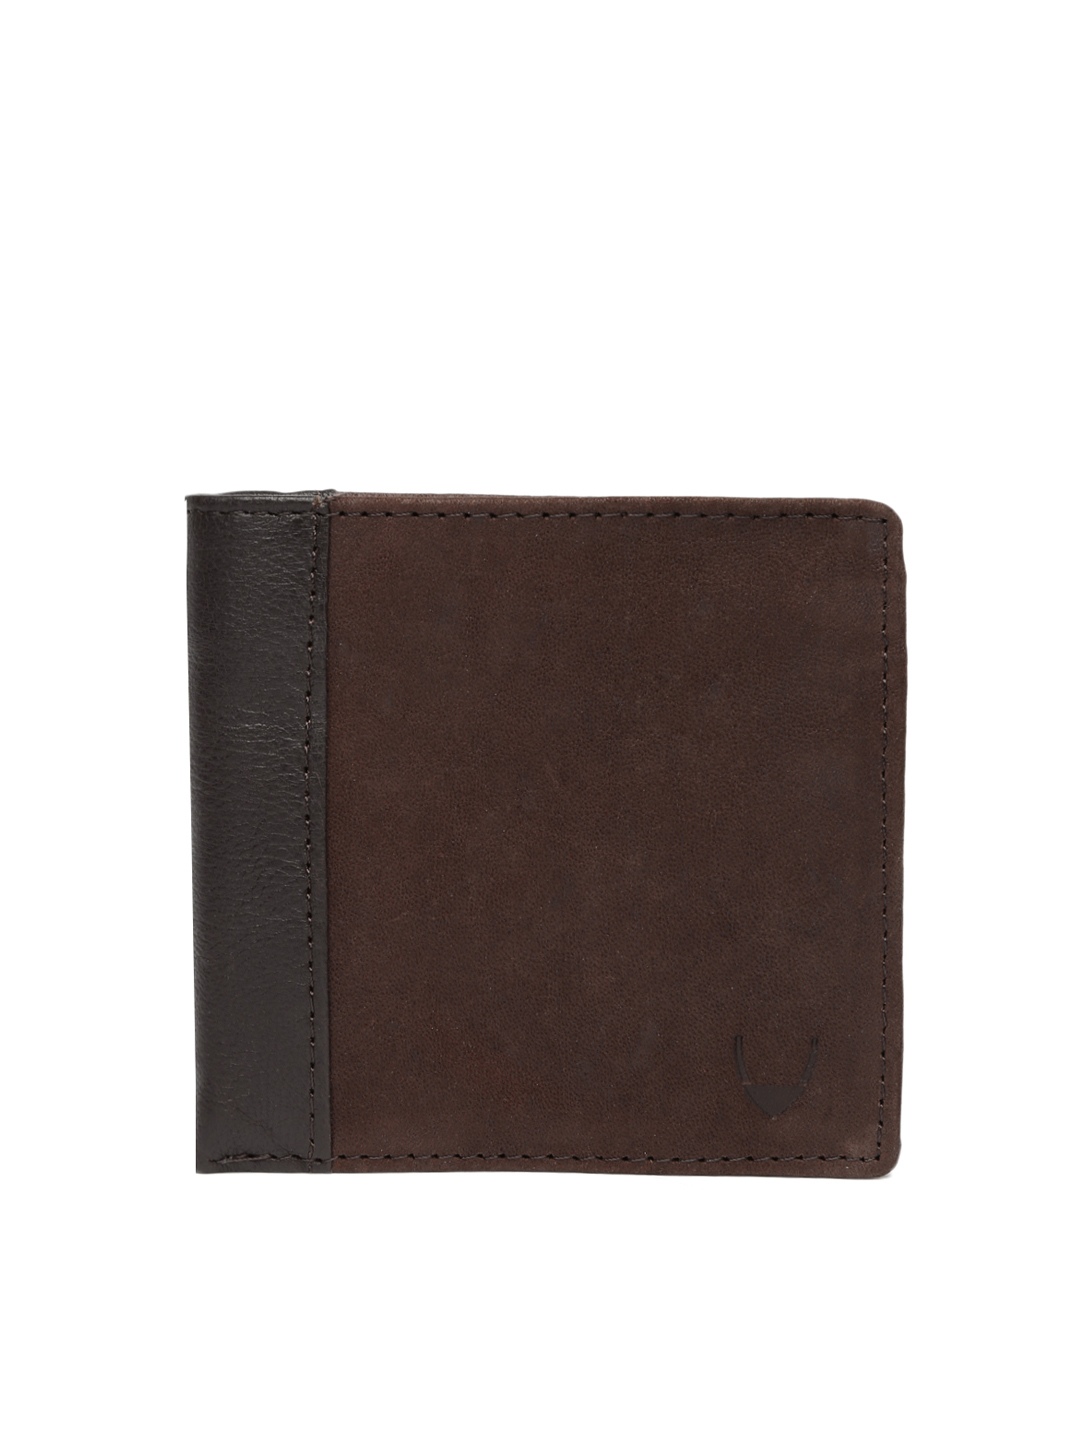 Myntra Hidesign Men Brown Leather Wallet 854458 | Buy Myntra Hidesign Wallets at best price ...